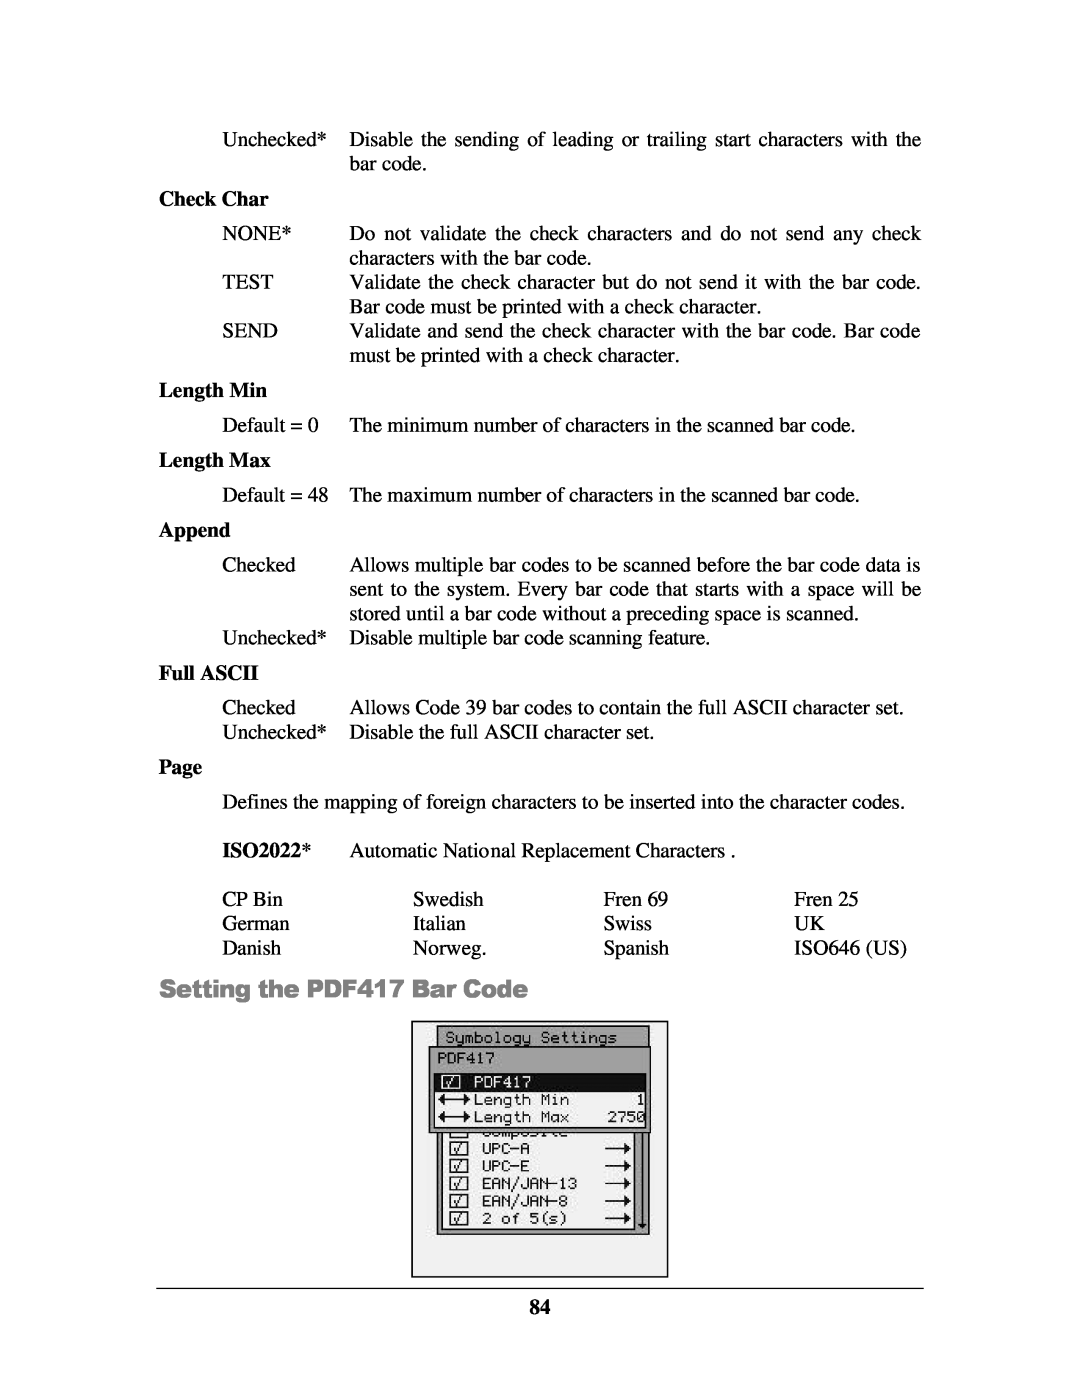 IBM M71V2 manual Setting the PDF417 Bar Code, Check Char, Length Min, Length Max, Append, Full ASCII, Page 